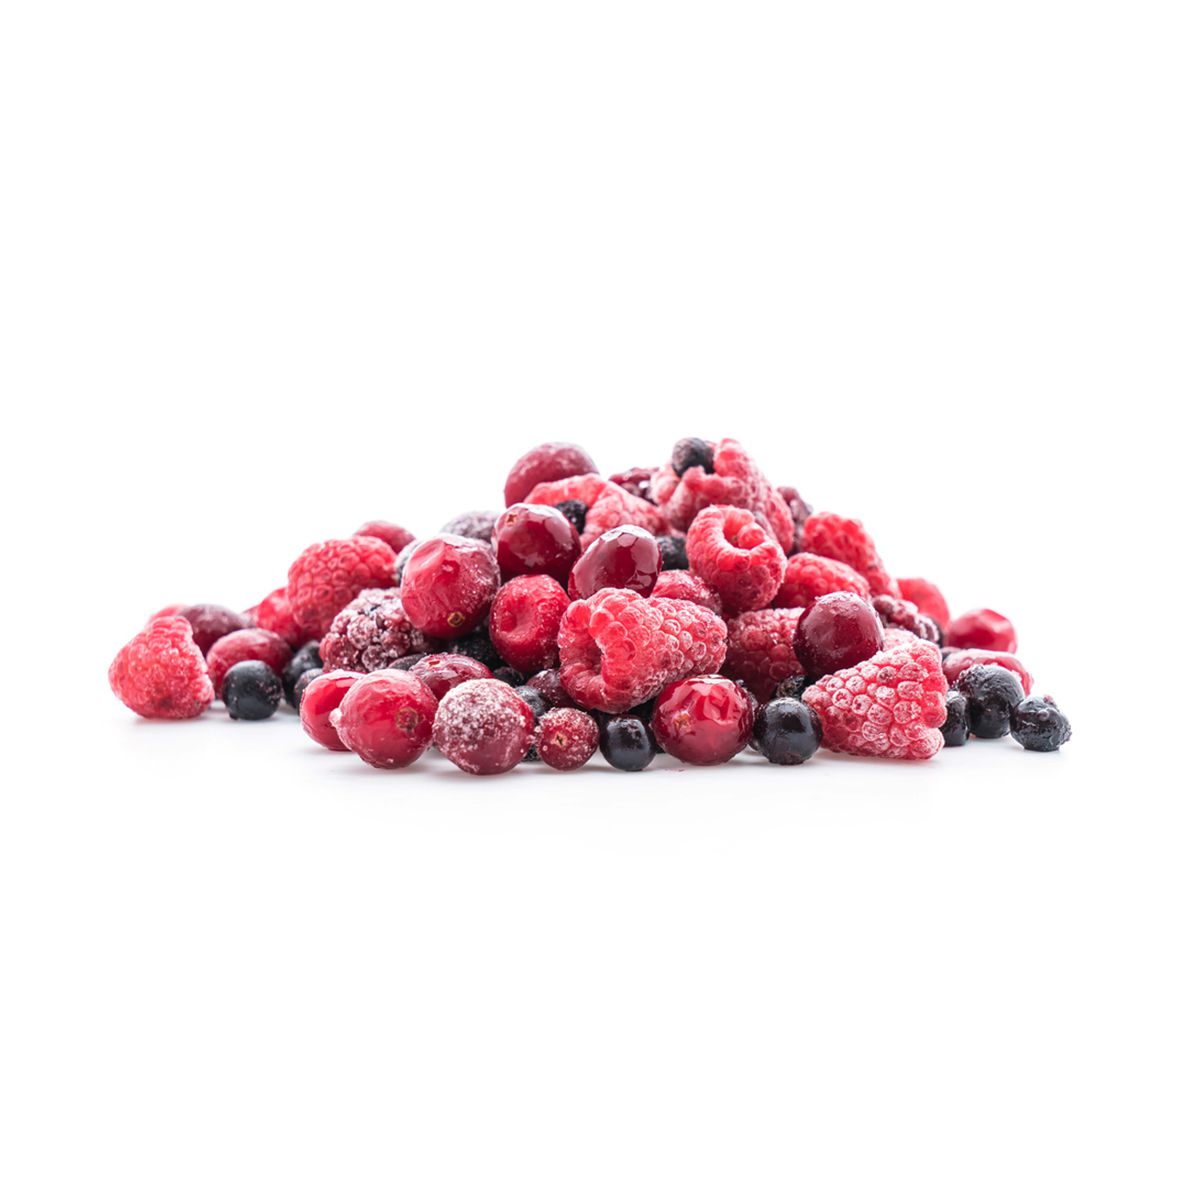 BoxNCase Frozen Mixed Berries 5 lb